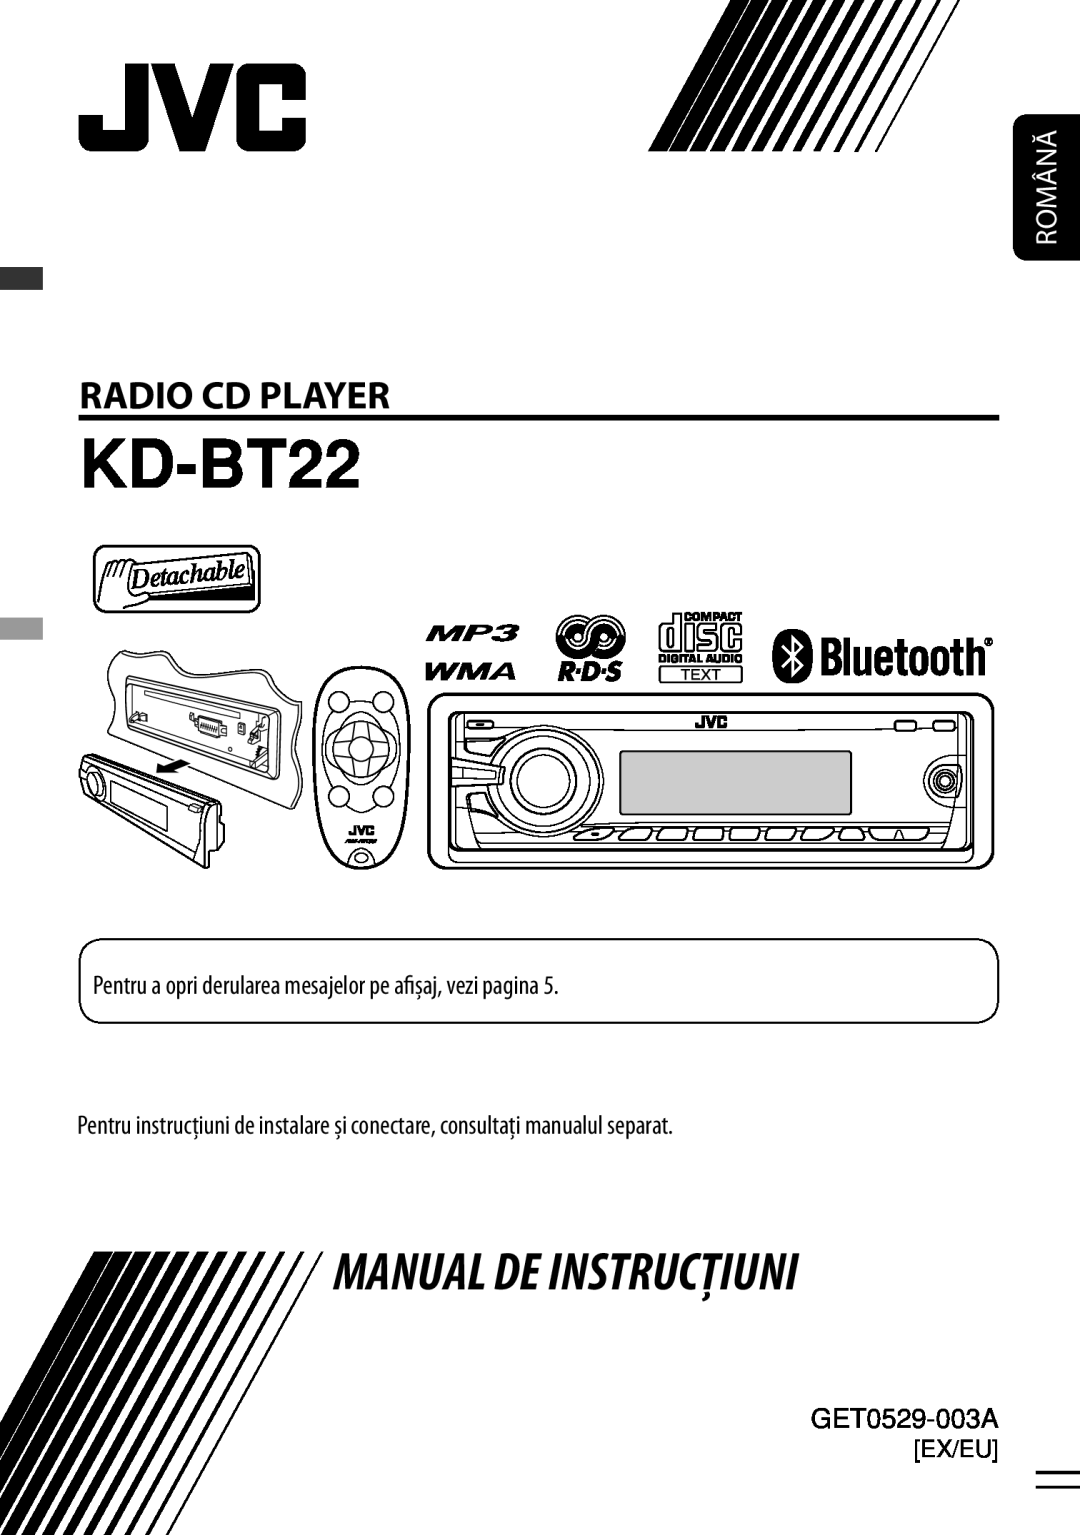 JVC KD-BT22 manual Radioécepteurcd Playercd, I Manualinstructionsde Instrucţiuni, Cd Receiver, Français Românăenglish 